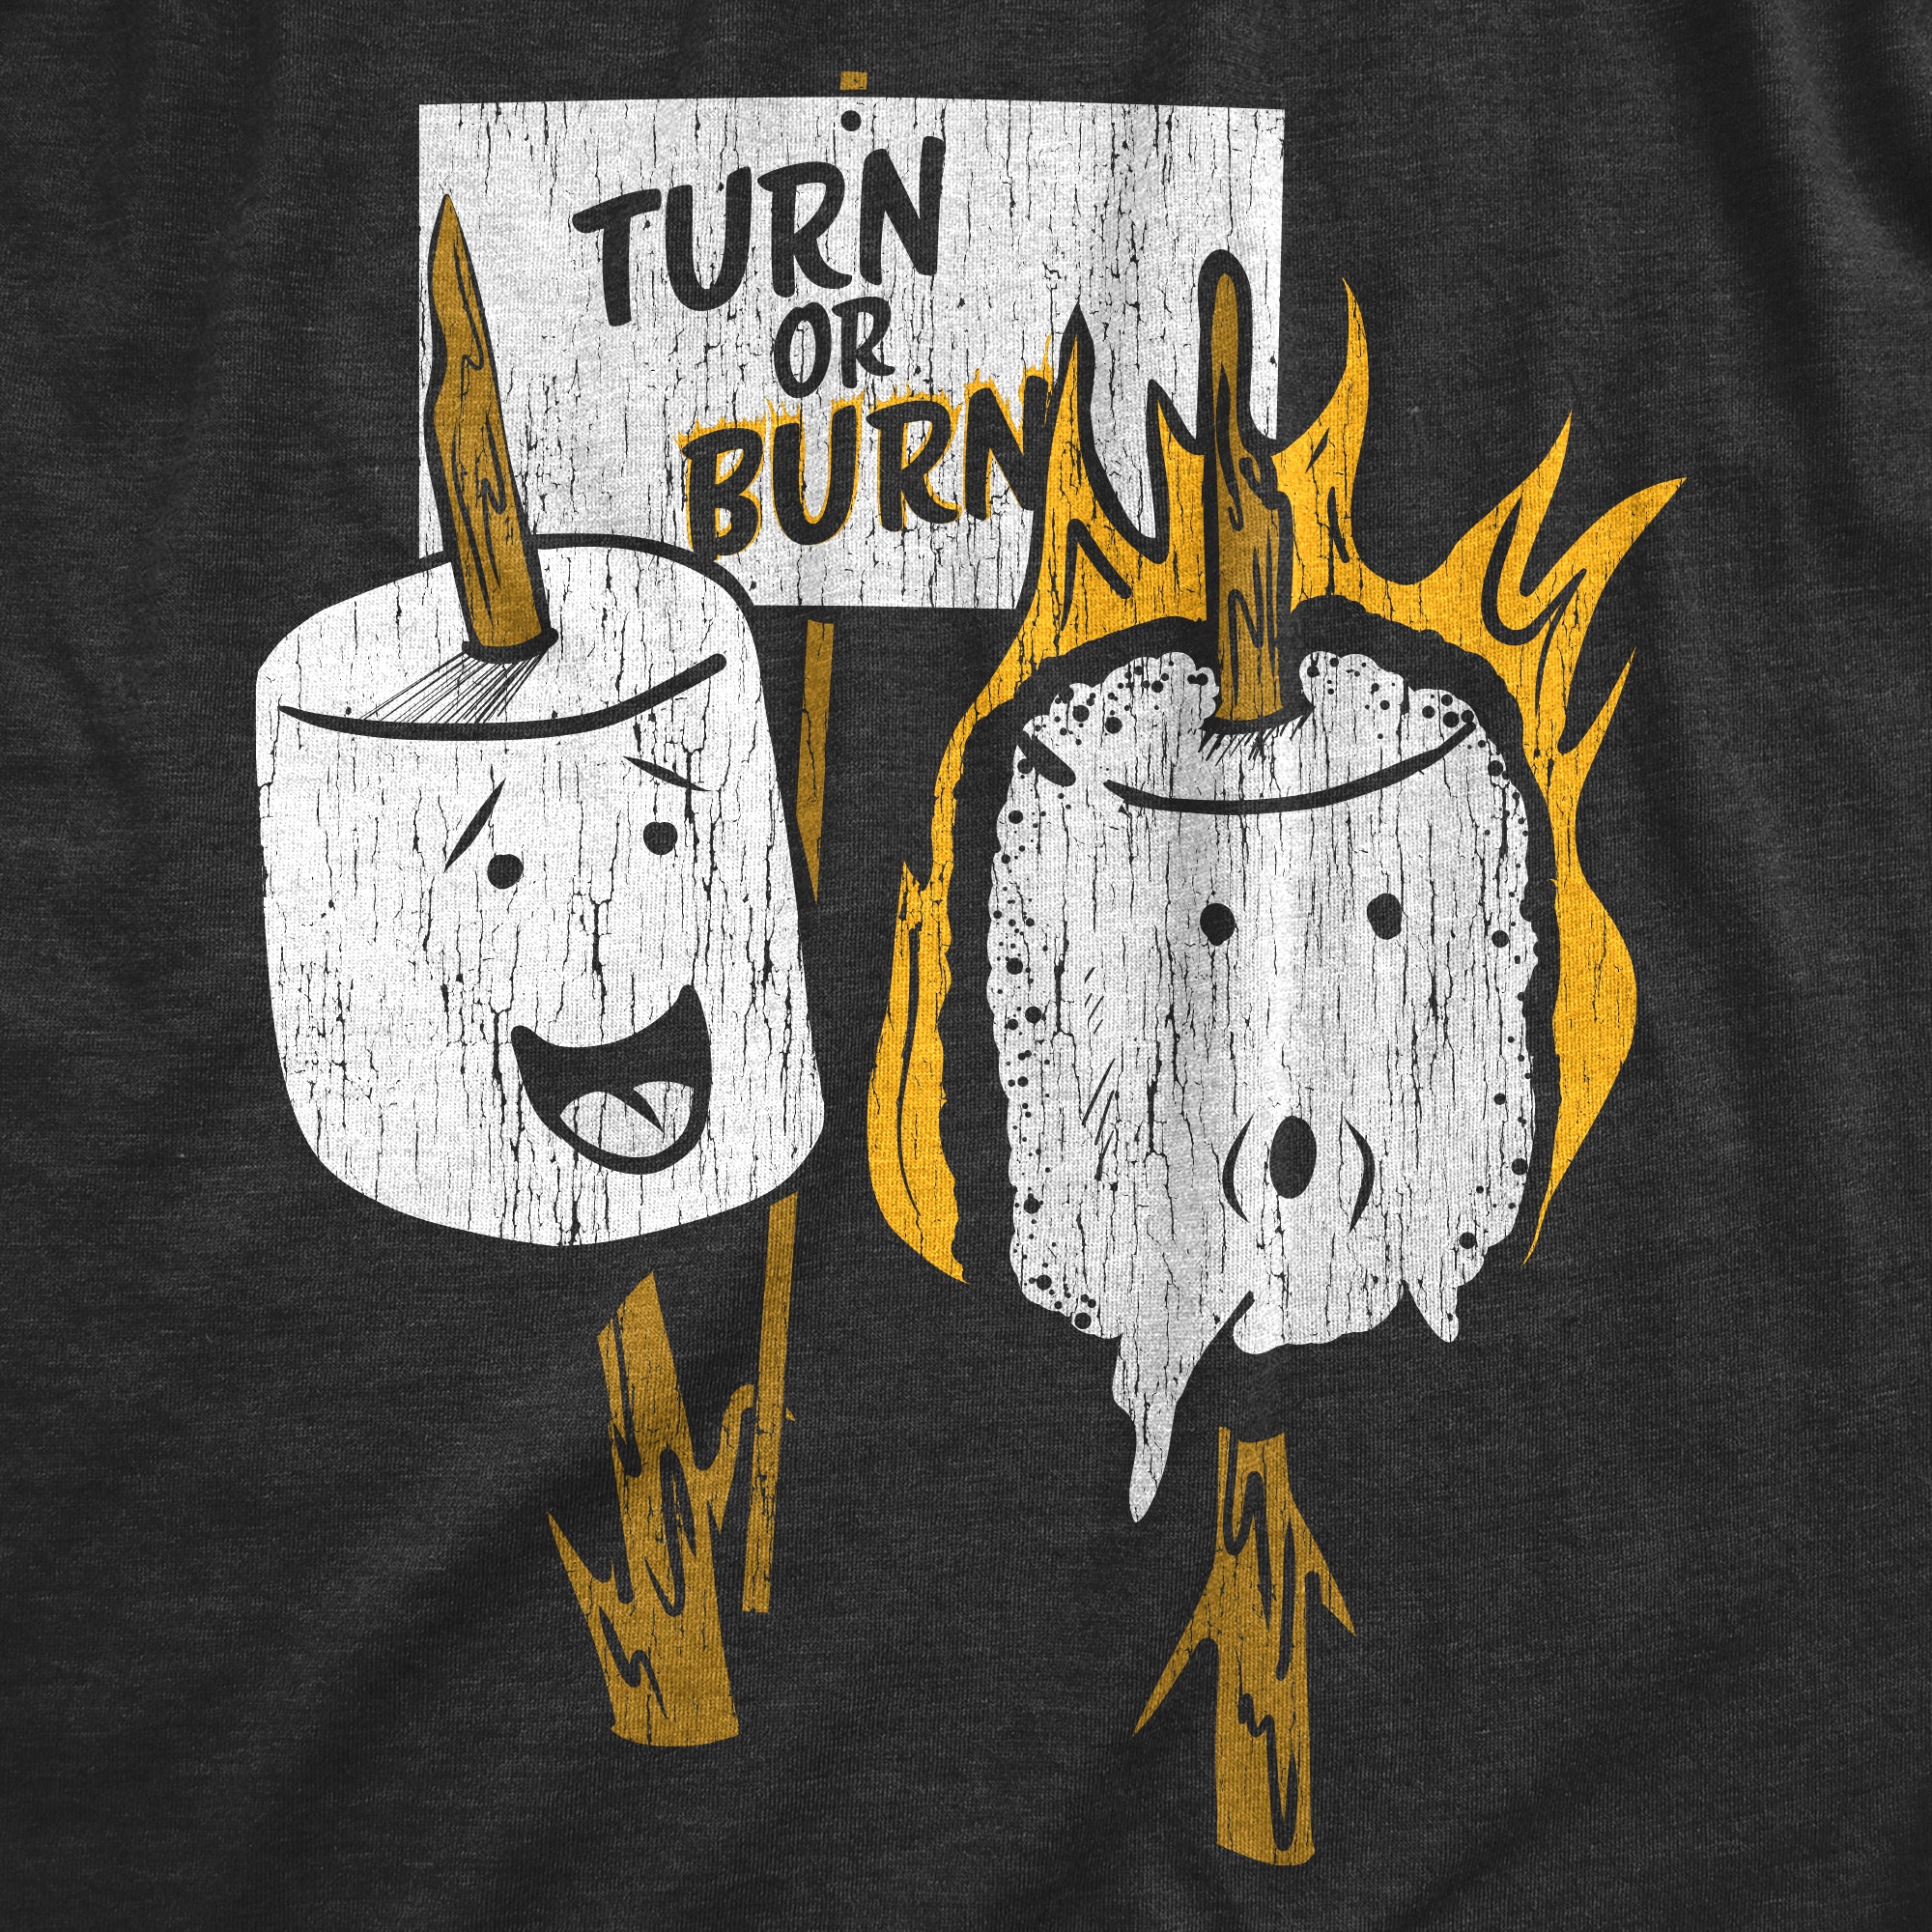 Funny Heather Black - TURN Turn Or Burn Womens T Shirt Nerdy camping Food sarcastic Tee